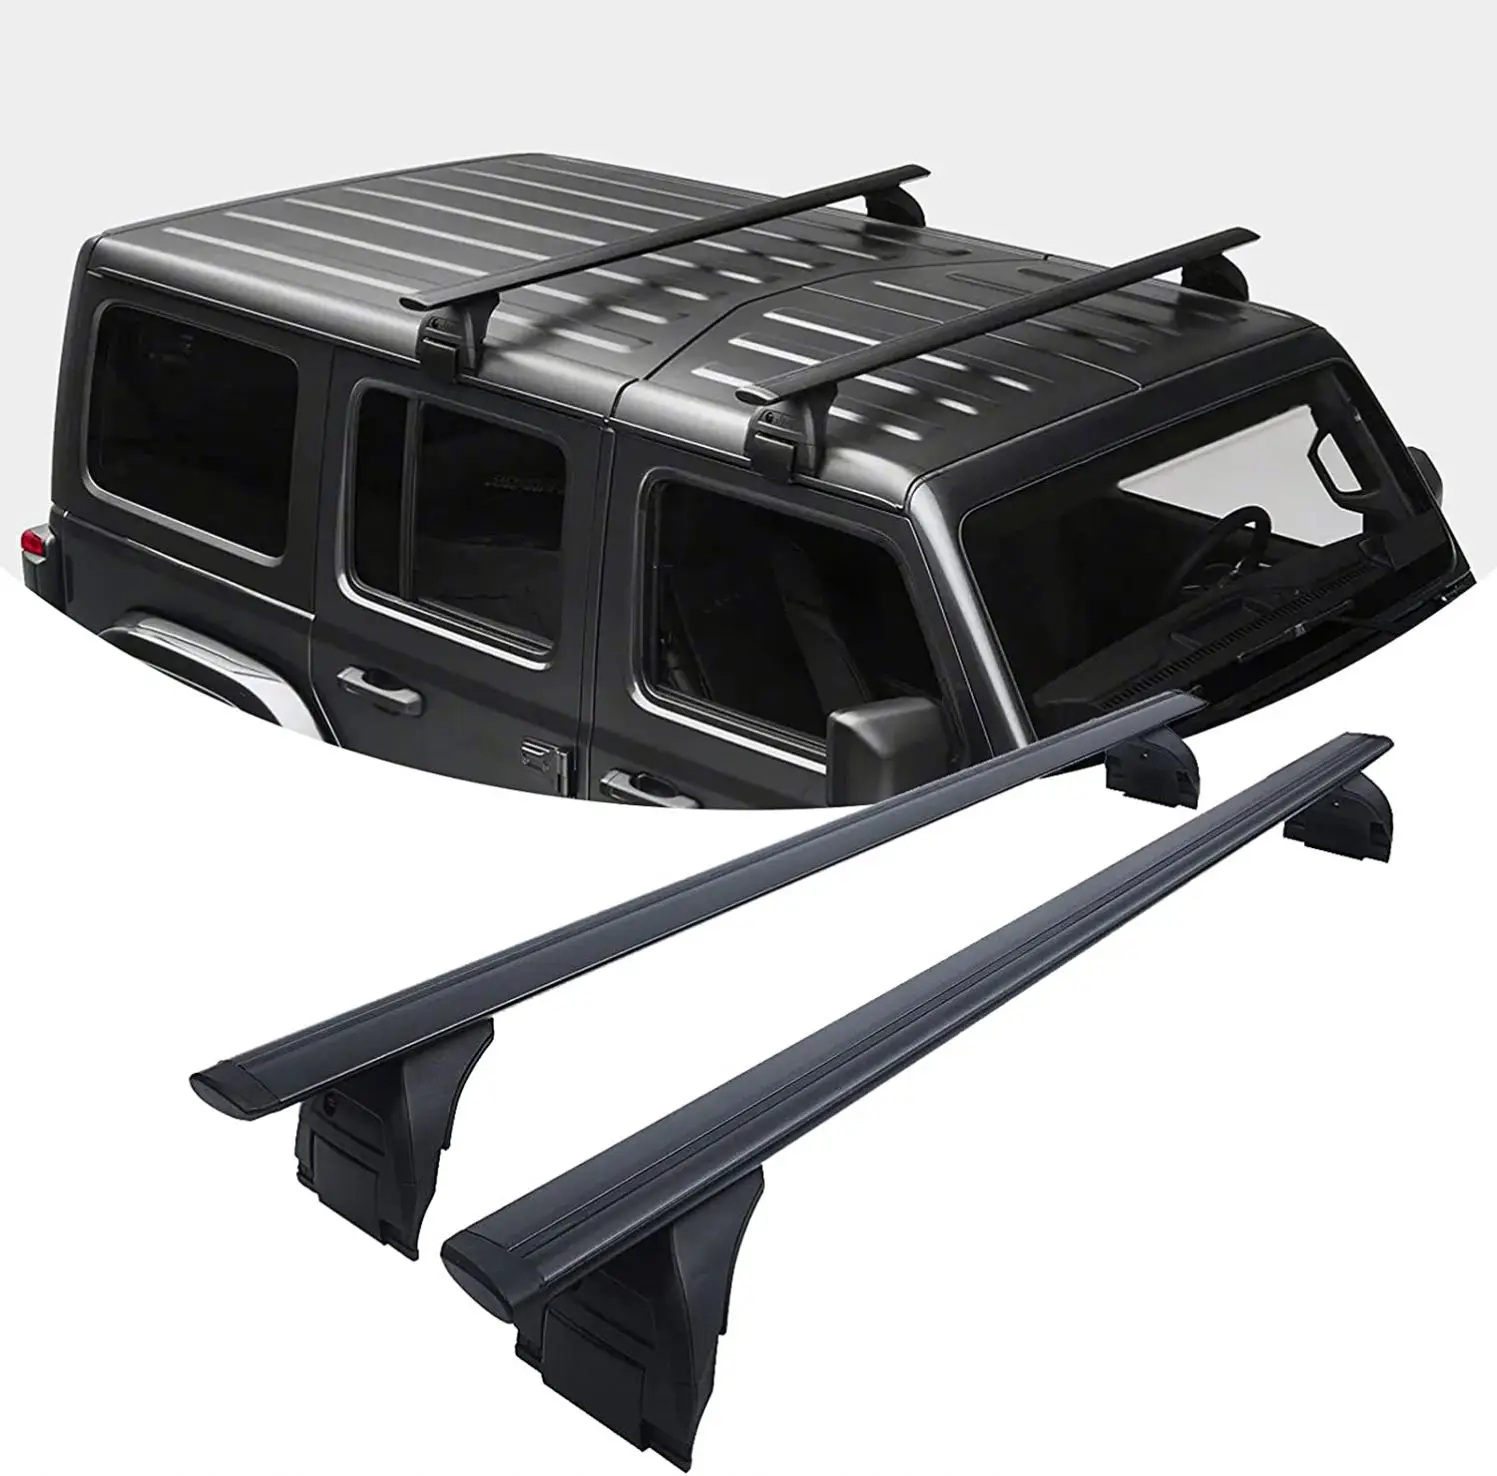 

Spedking JK JL JT Car Offroad 4x4 Auto Accessories aluminum roof rack for jeep wrangler